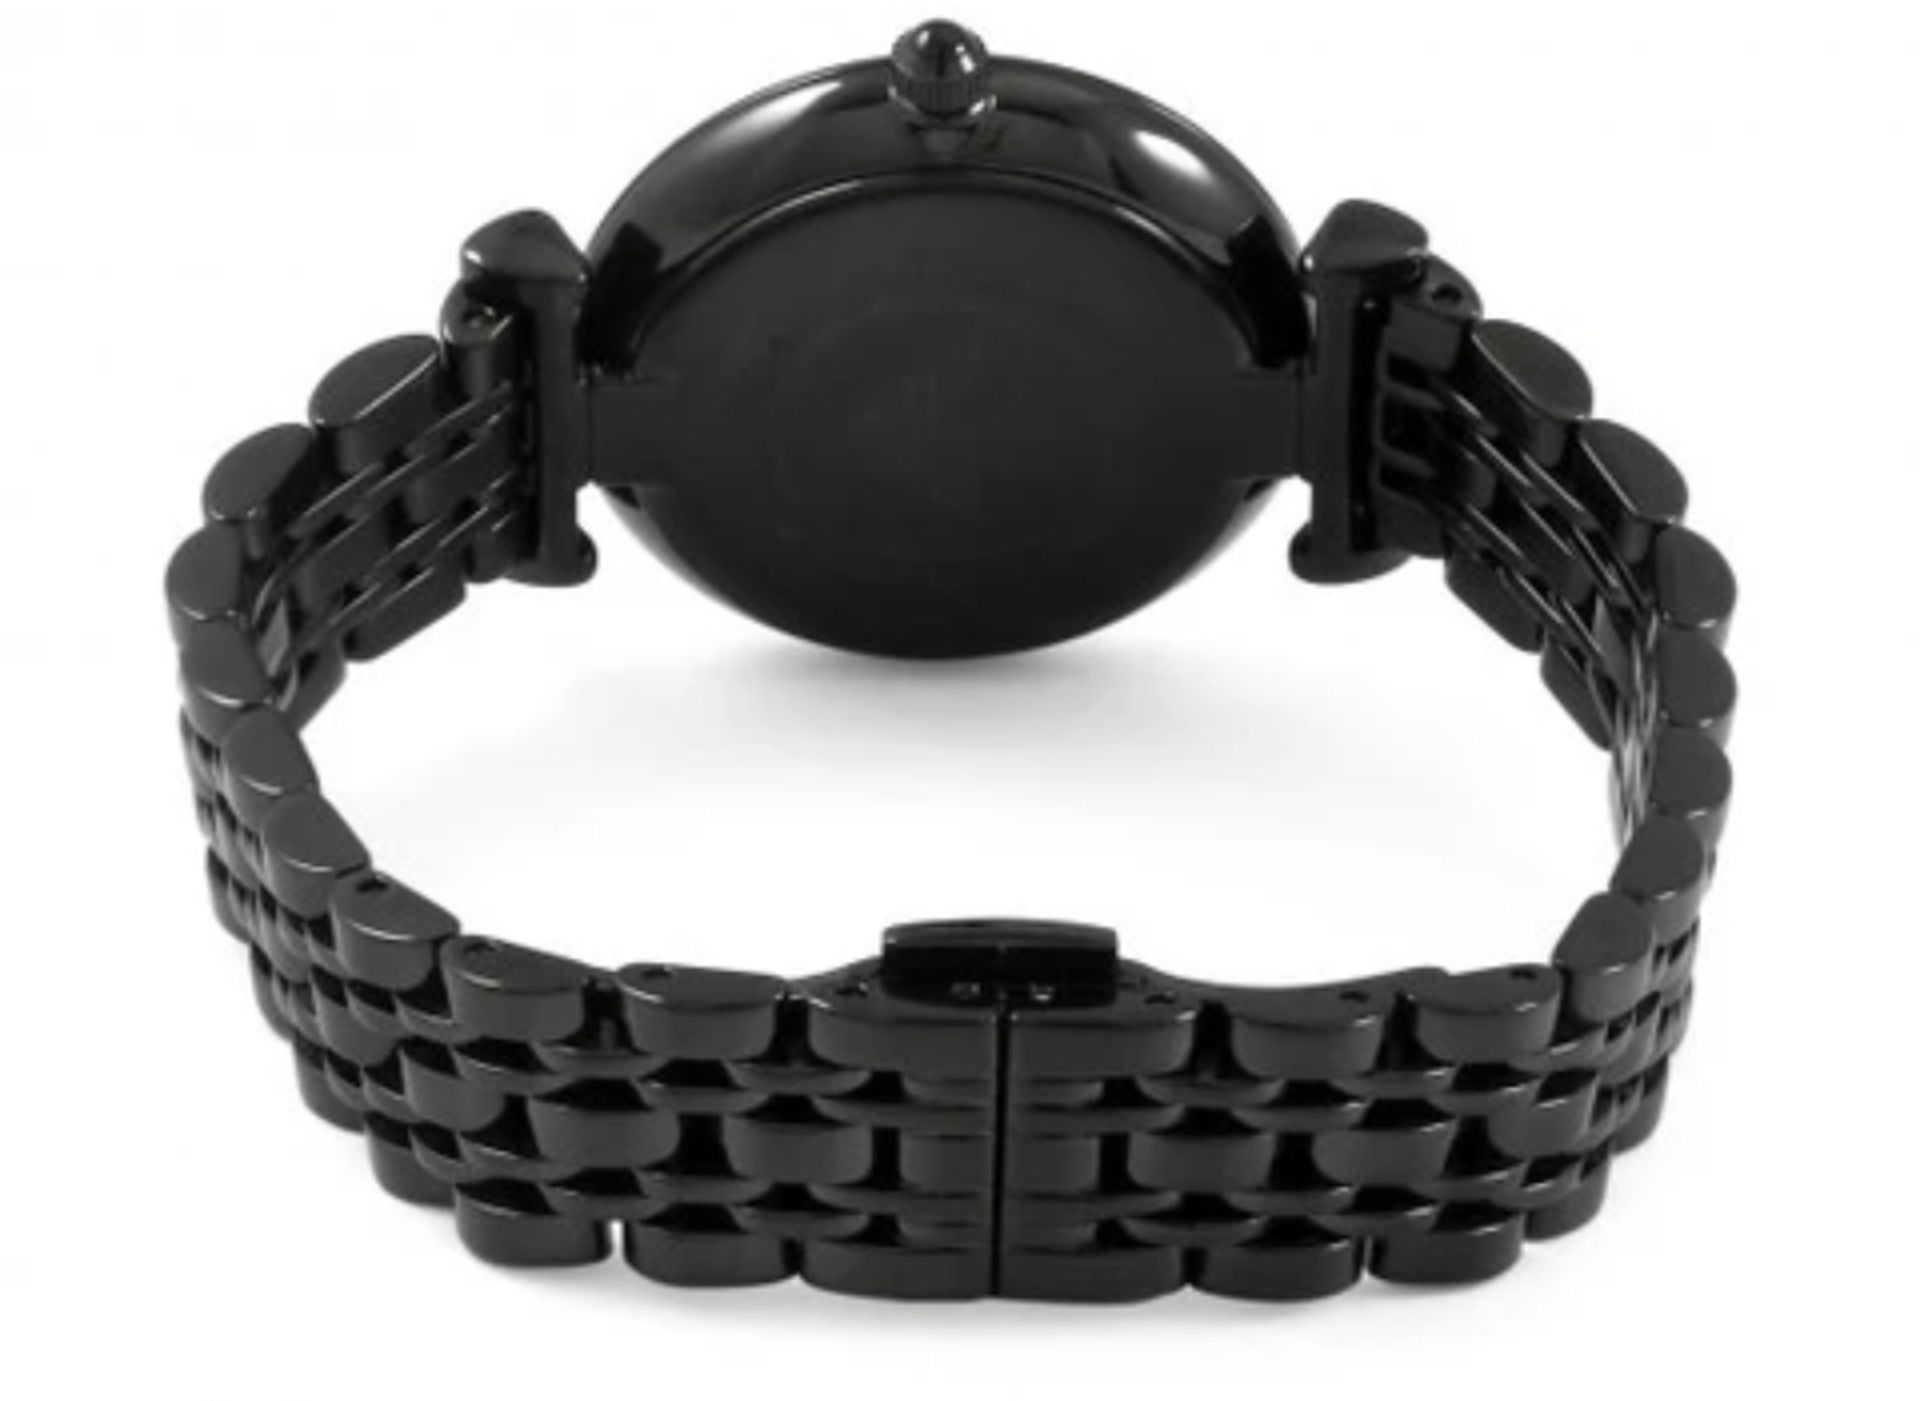 Emporio Armani AR11245 Ladies Black Dial Black Bracelet Quartz Chronograph Watch - Image 8 of 9